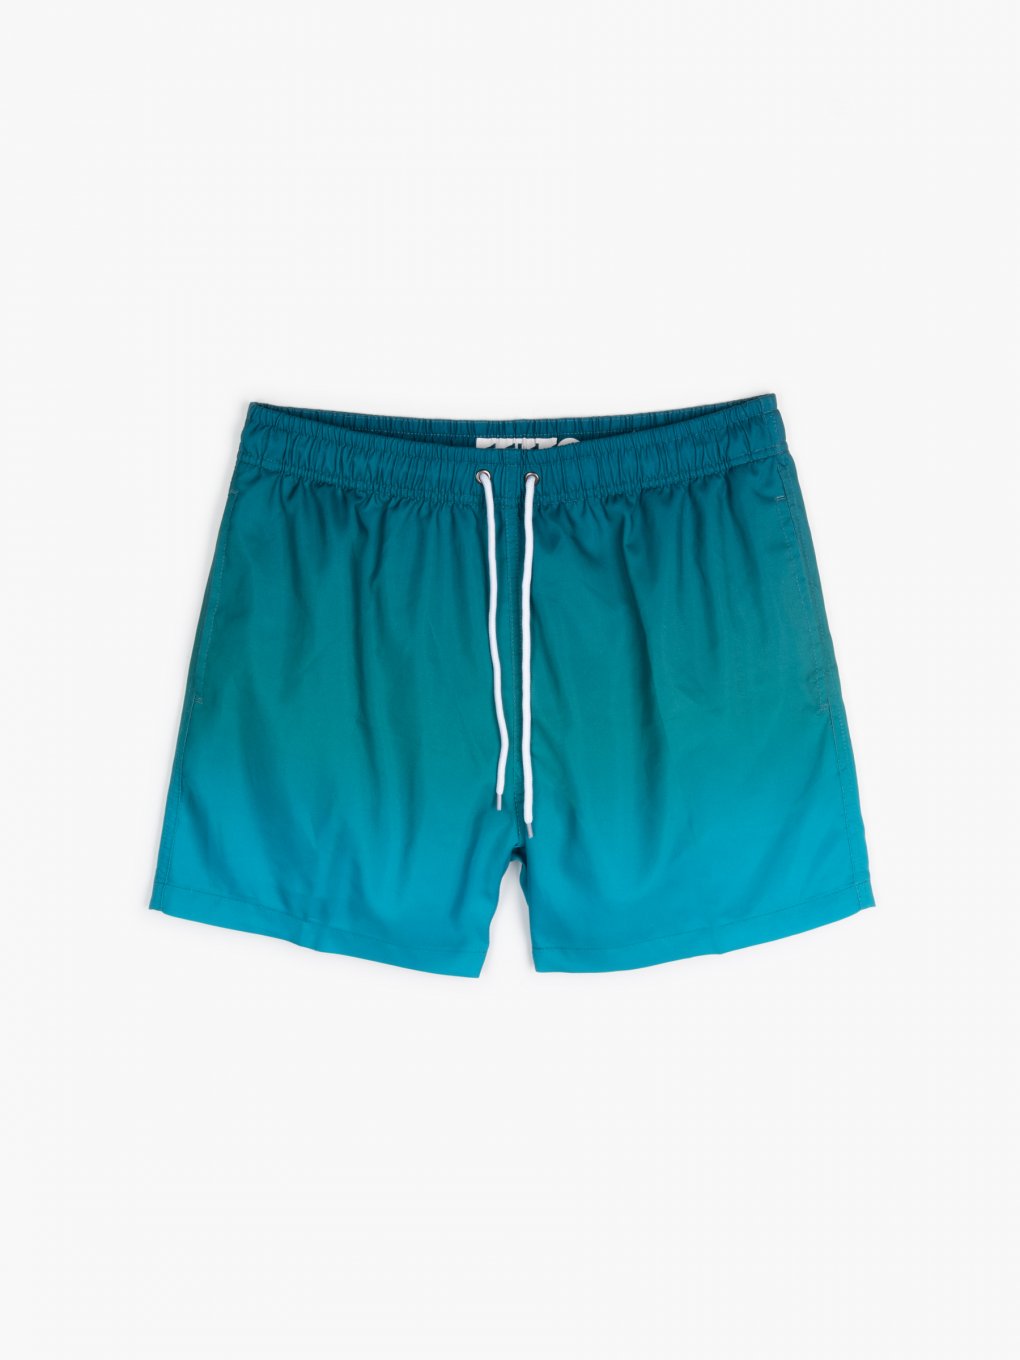 Dip dye swim shorts